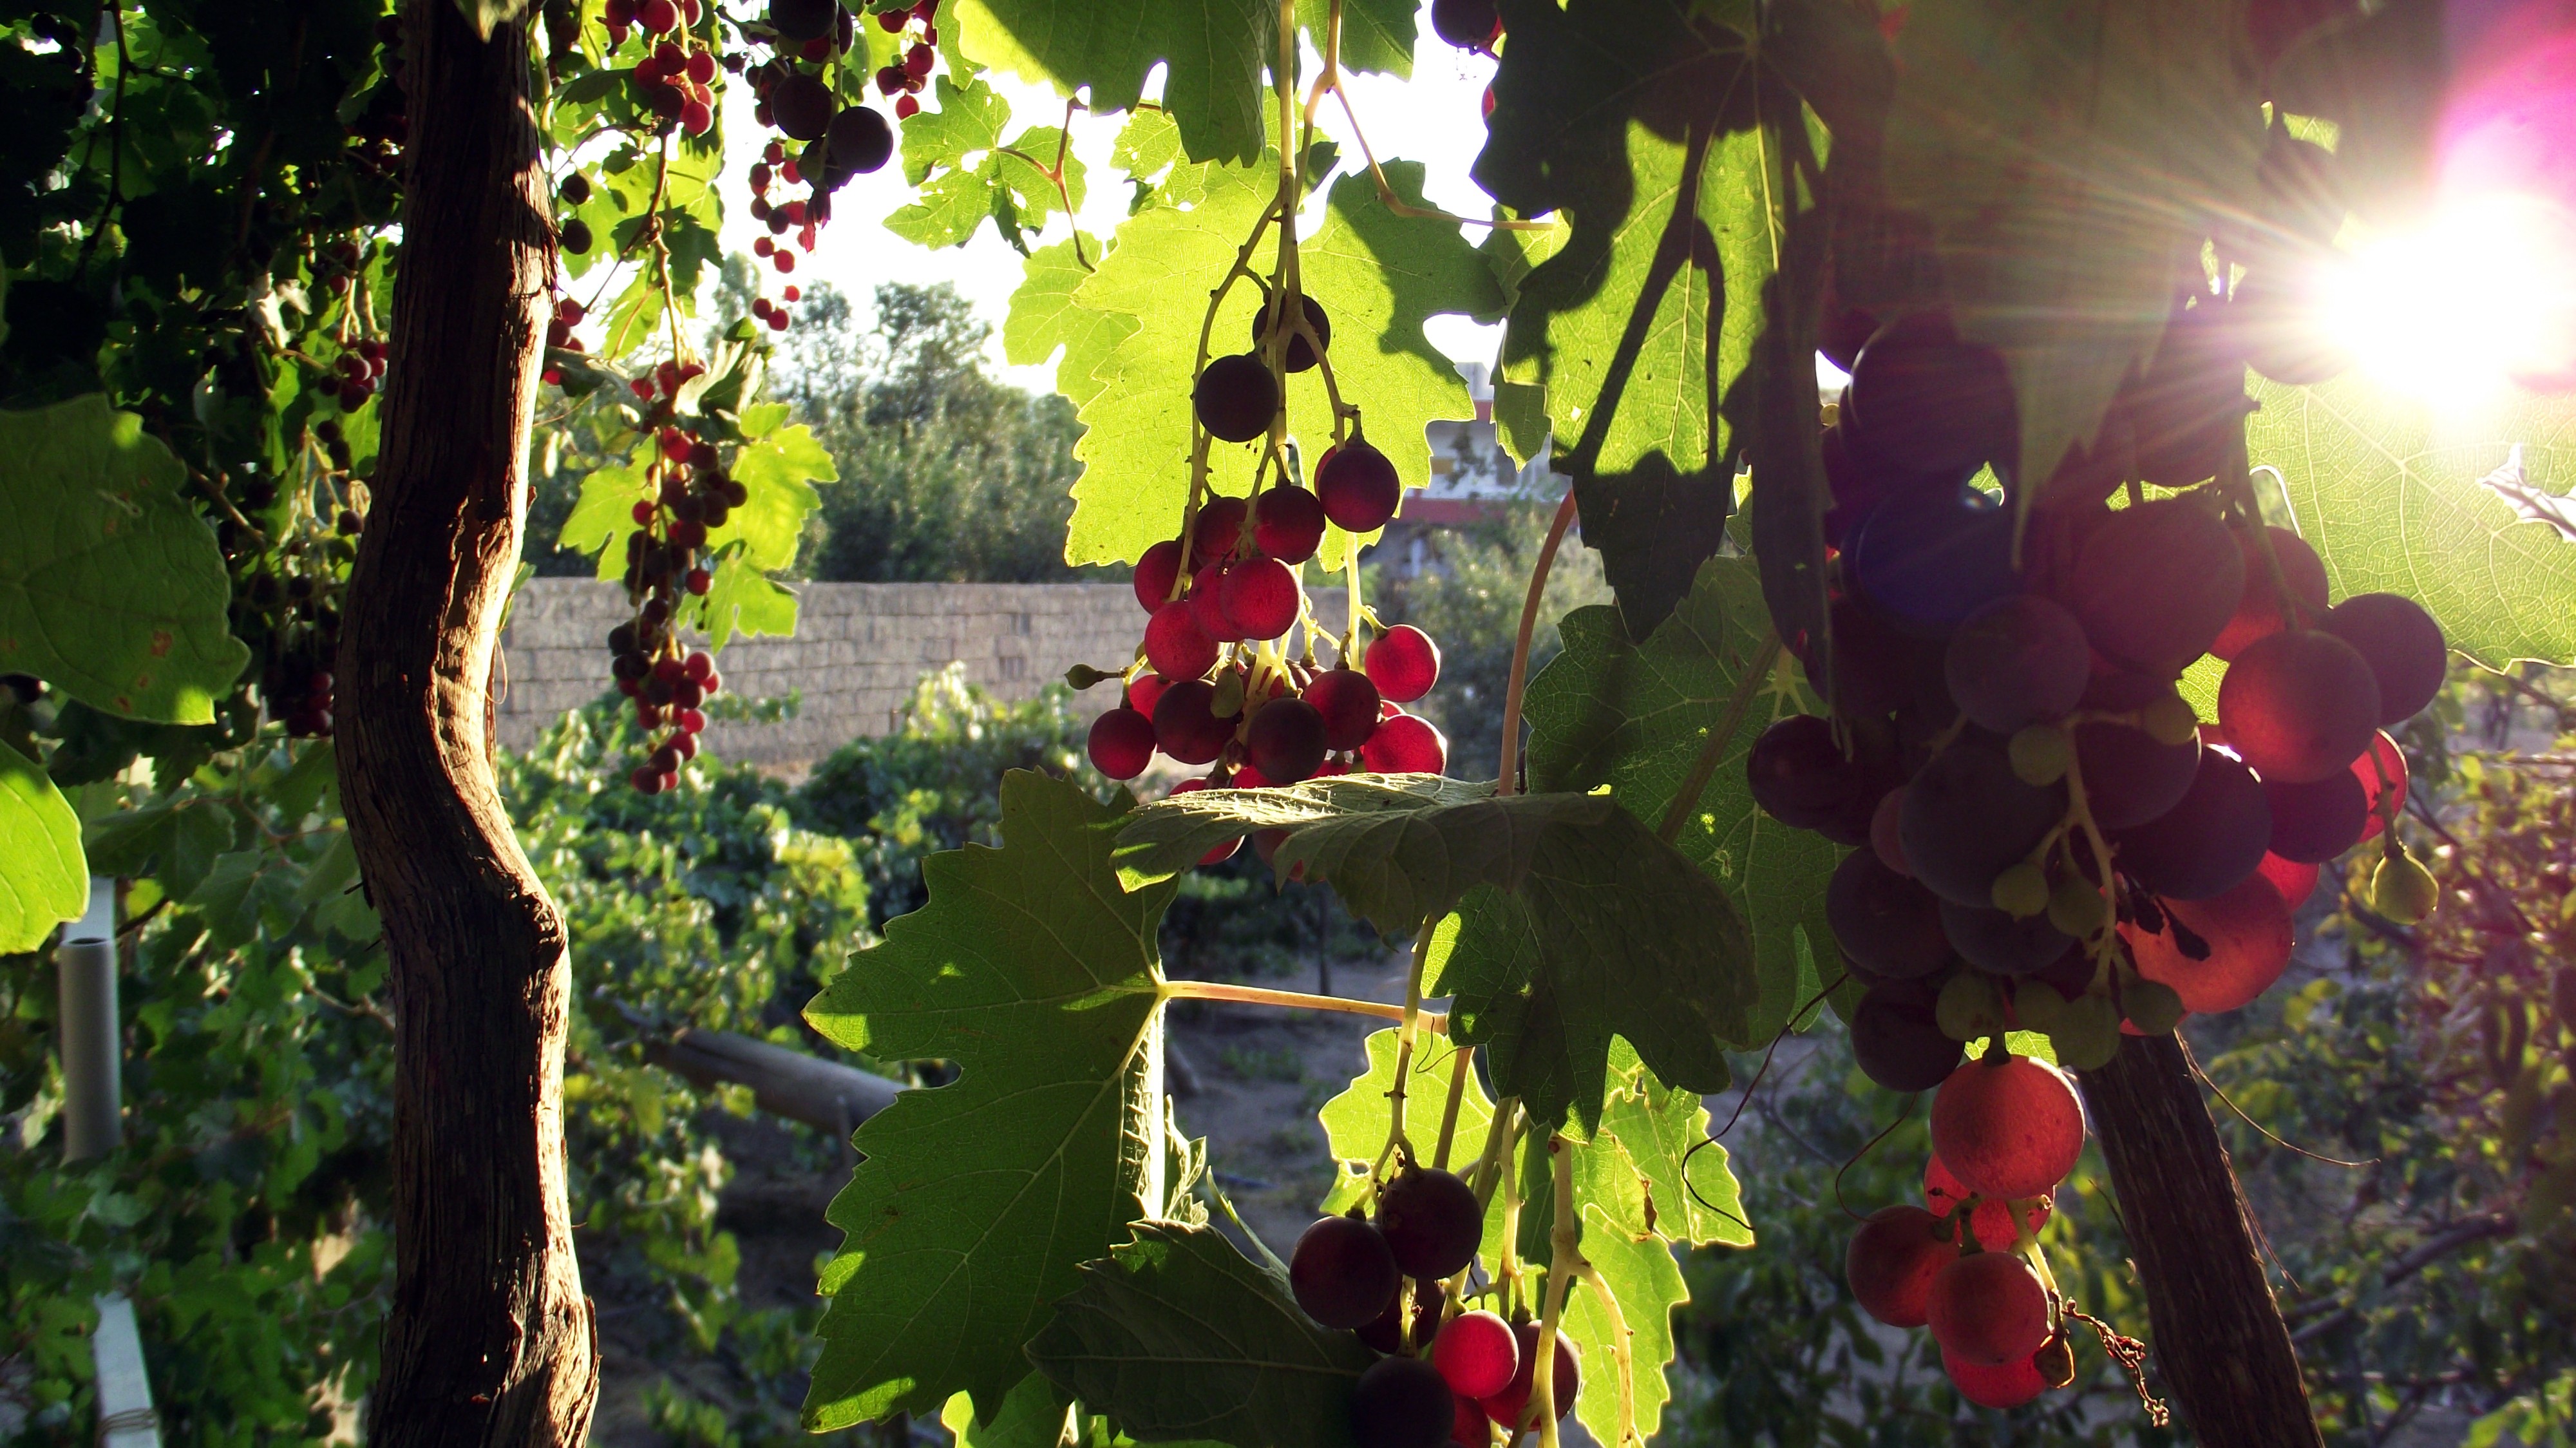 General 4000x2248 grapes fruit leaves sunlight fall berries plants food